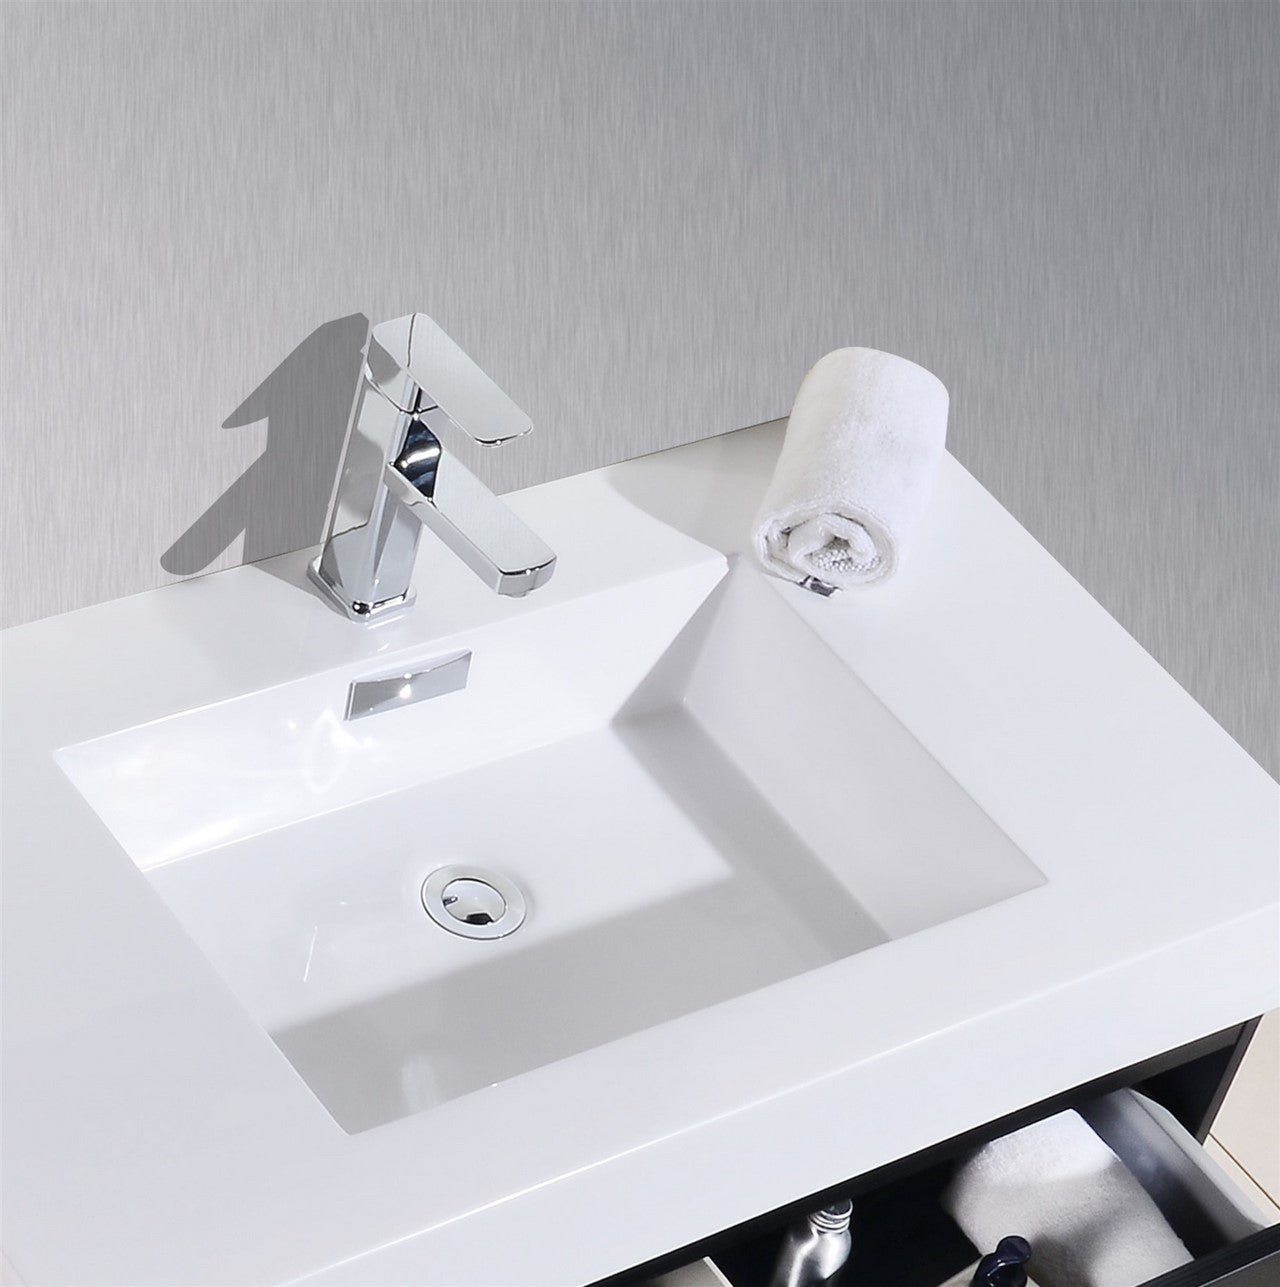 Bliss 72″ Black Wall Mount Double Sink Modern Bathroom Vanity